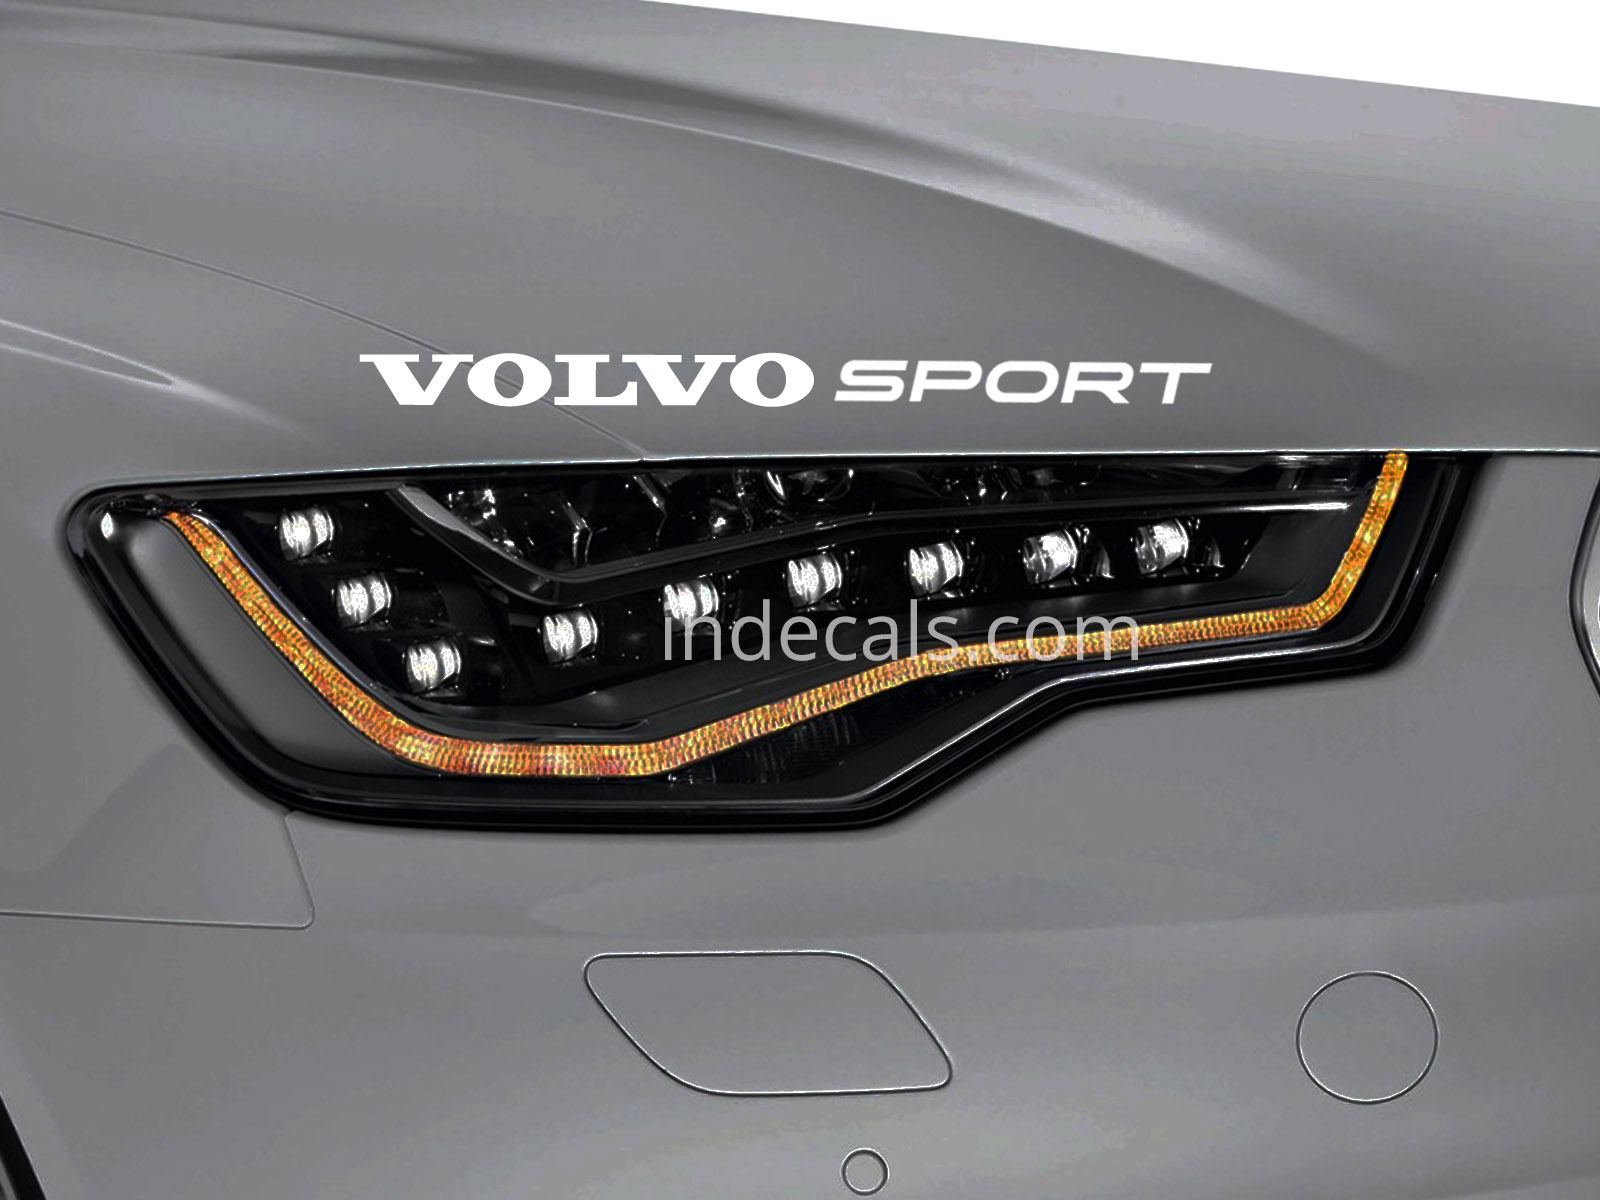 1 x Volvo Sport Sticker for Eyebrow - White